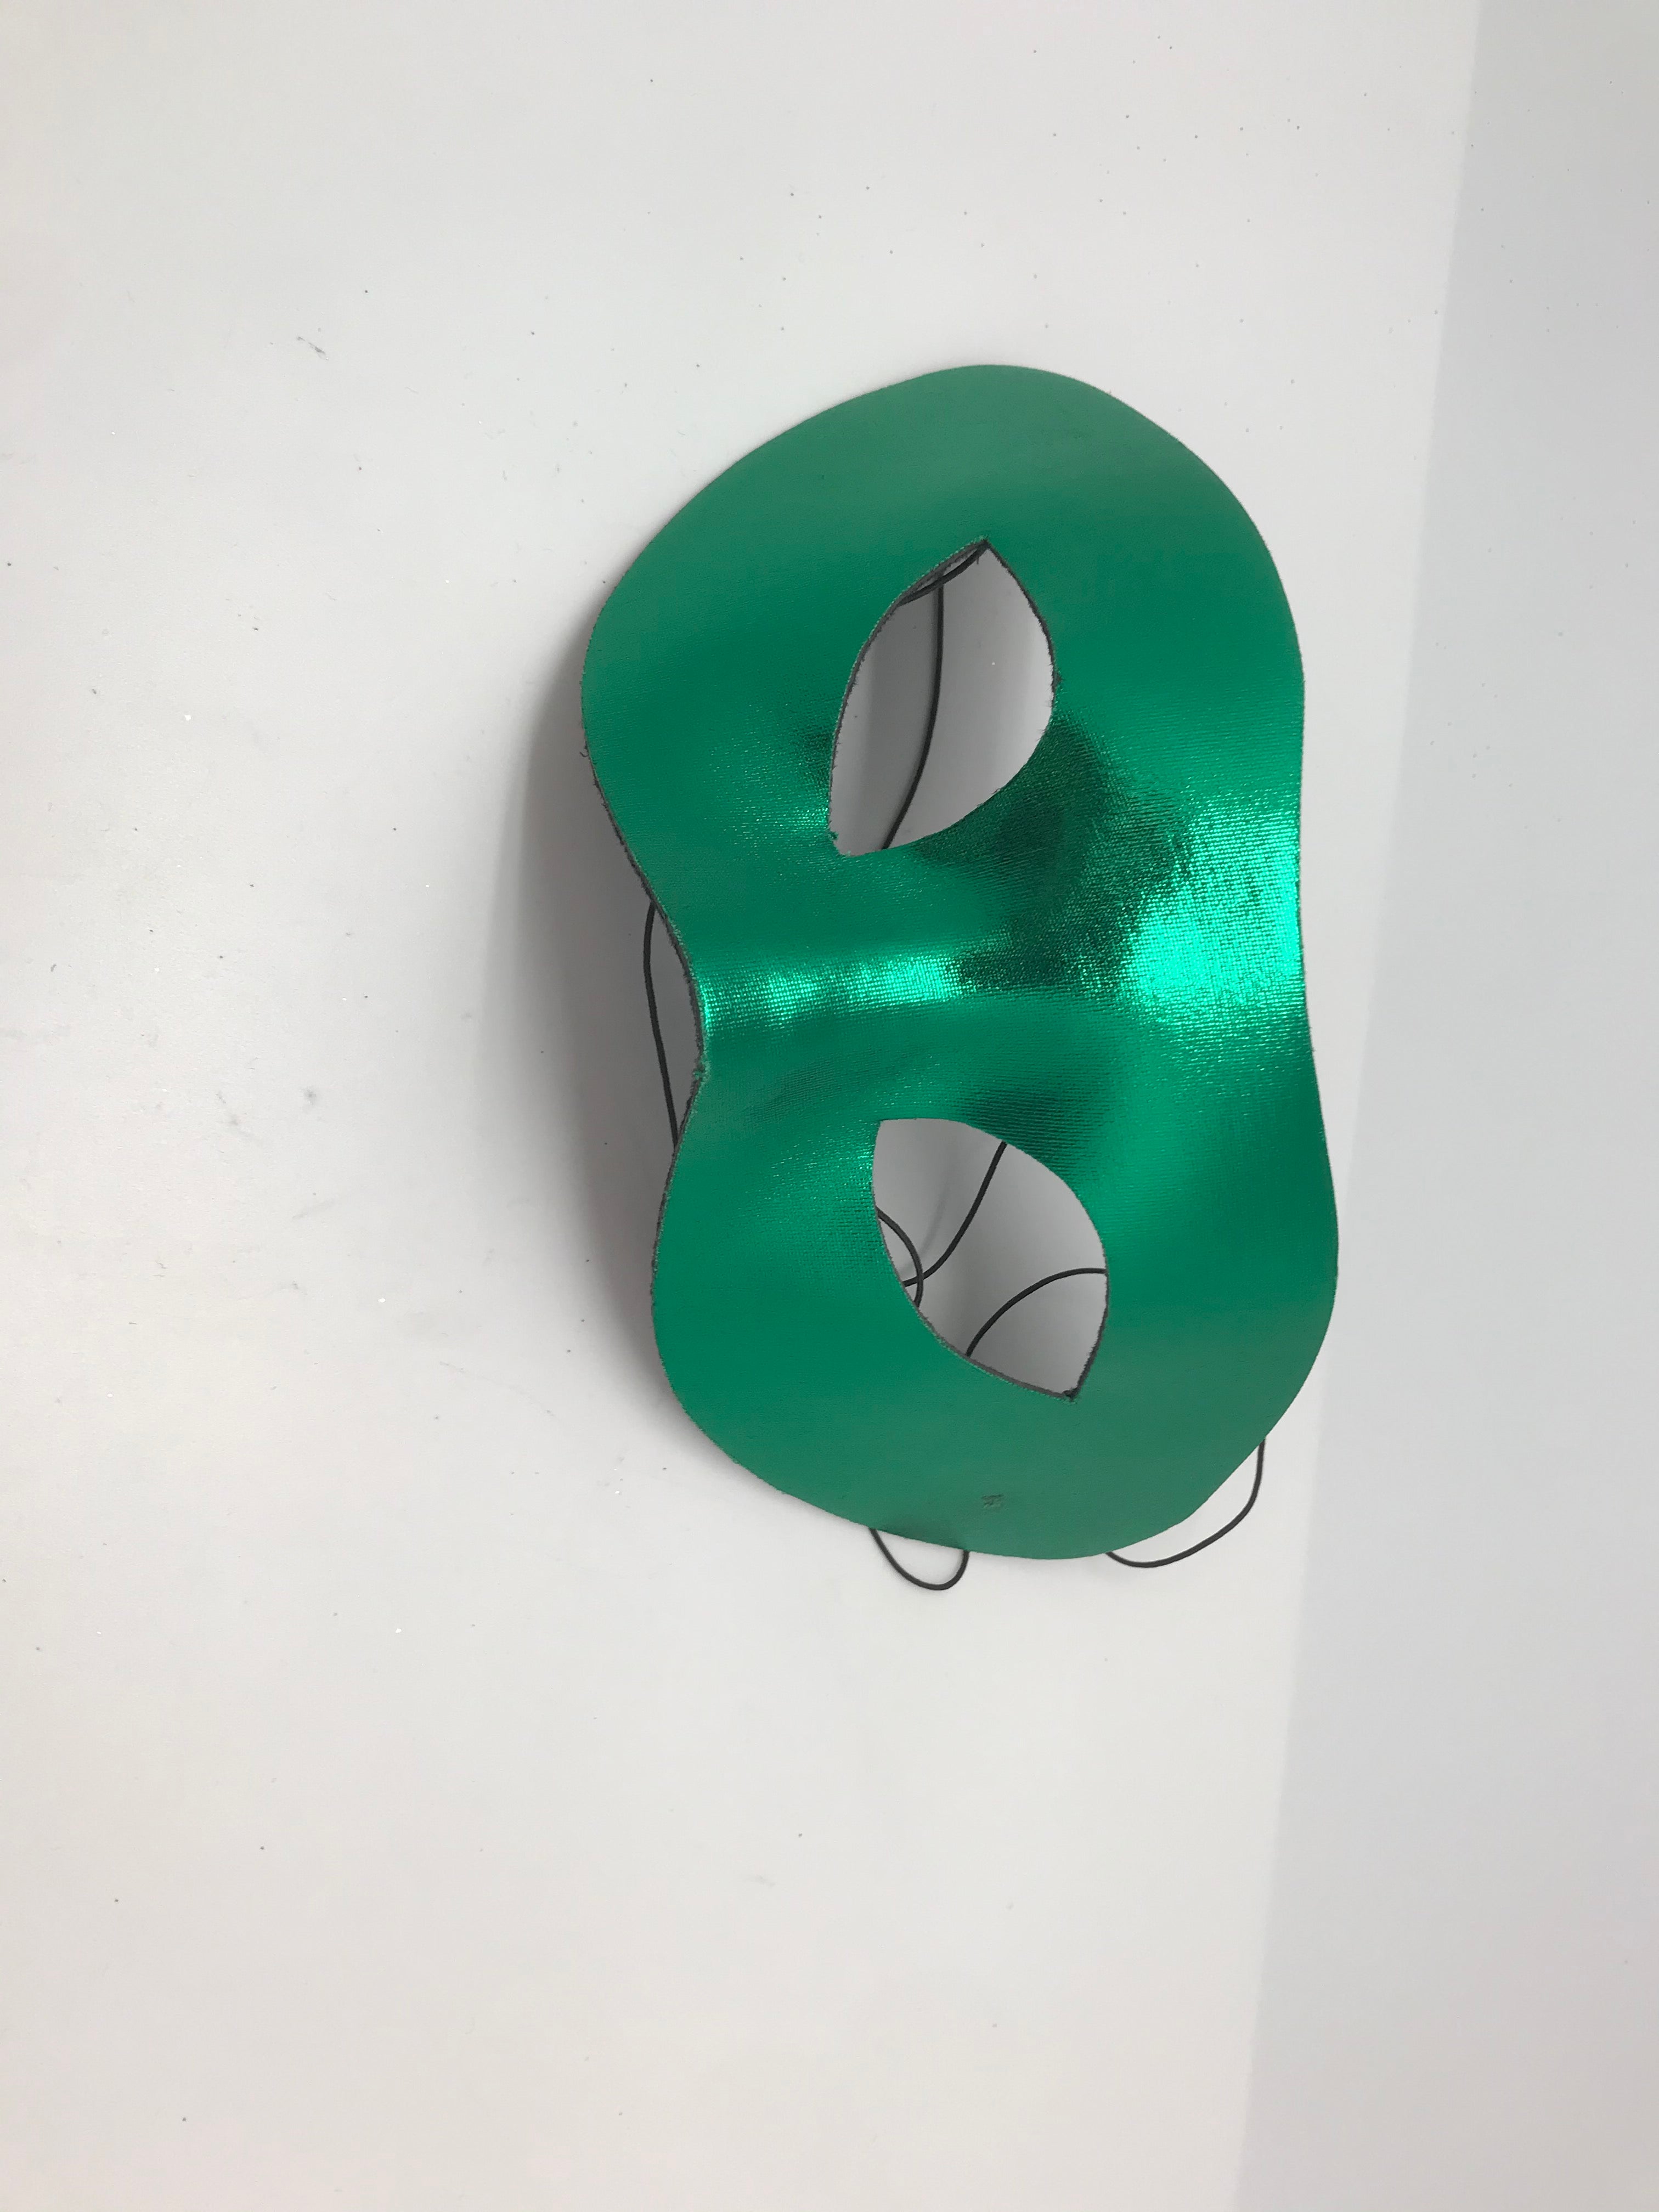 Metallic Form Fitting Masks